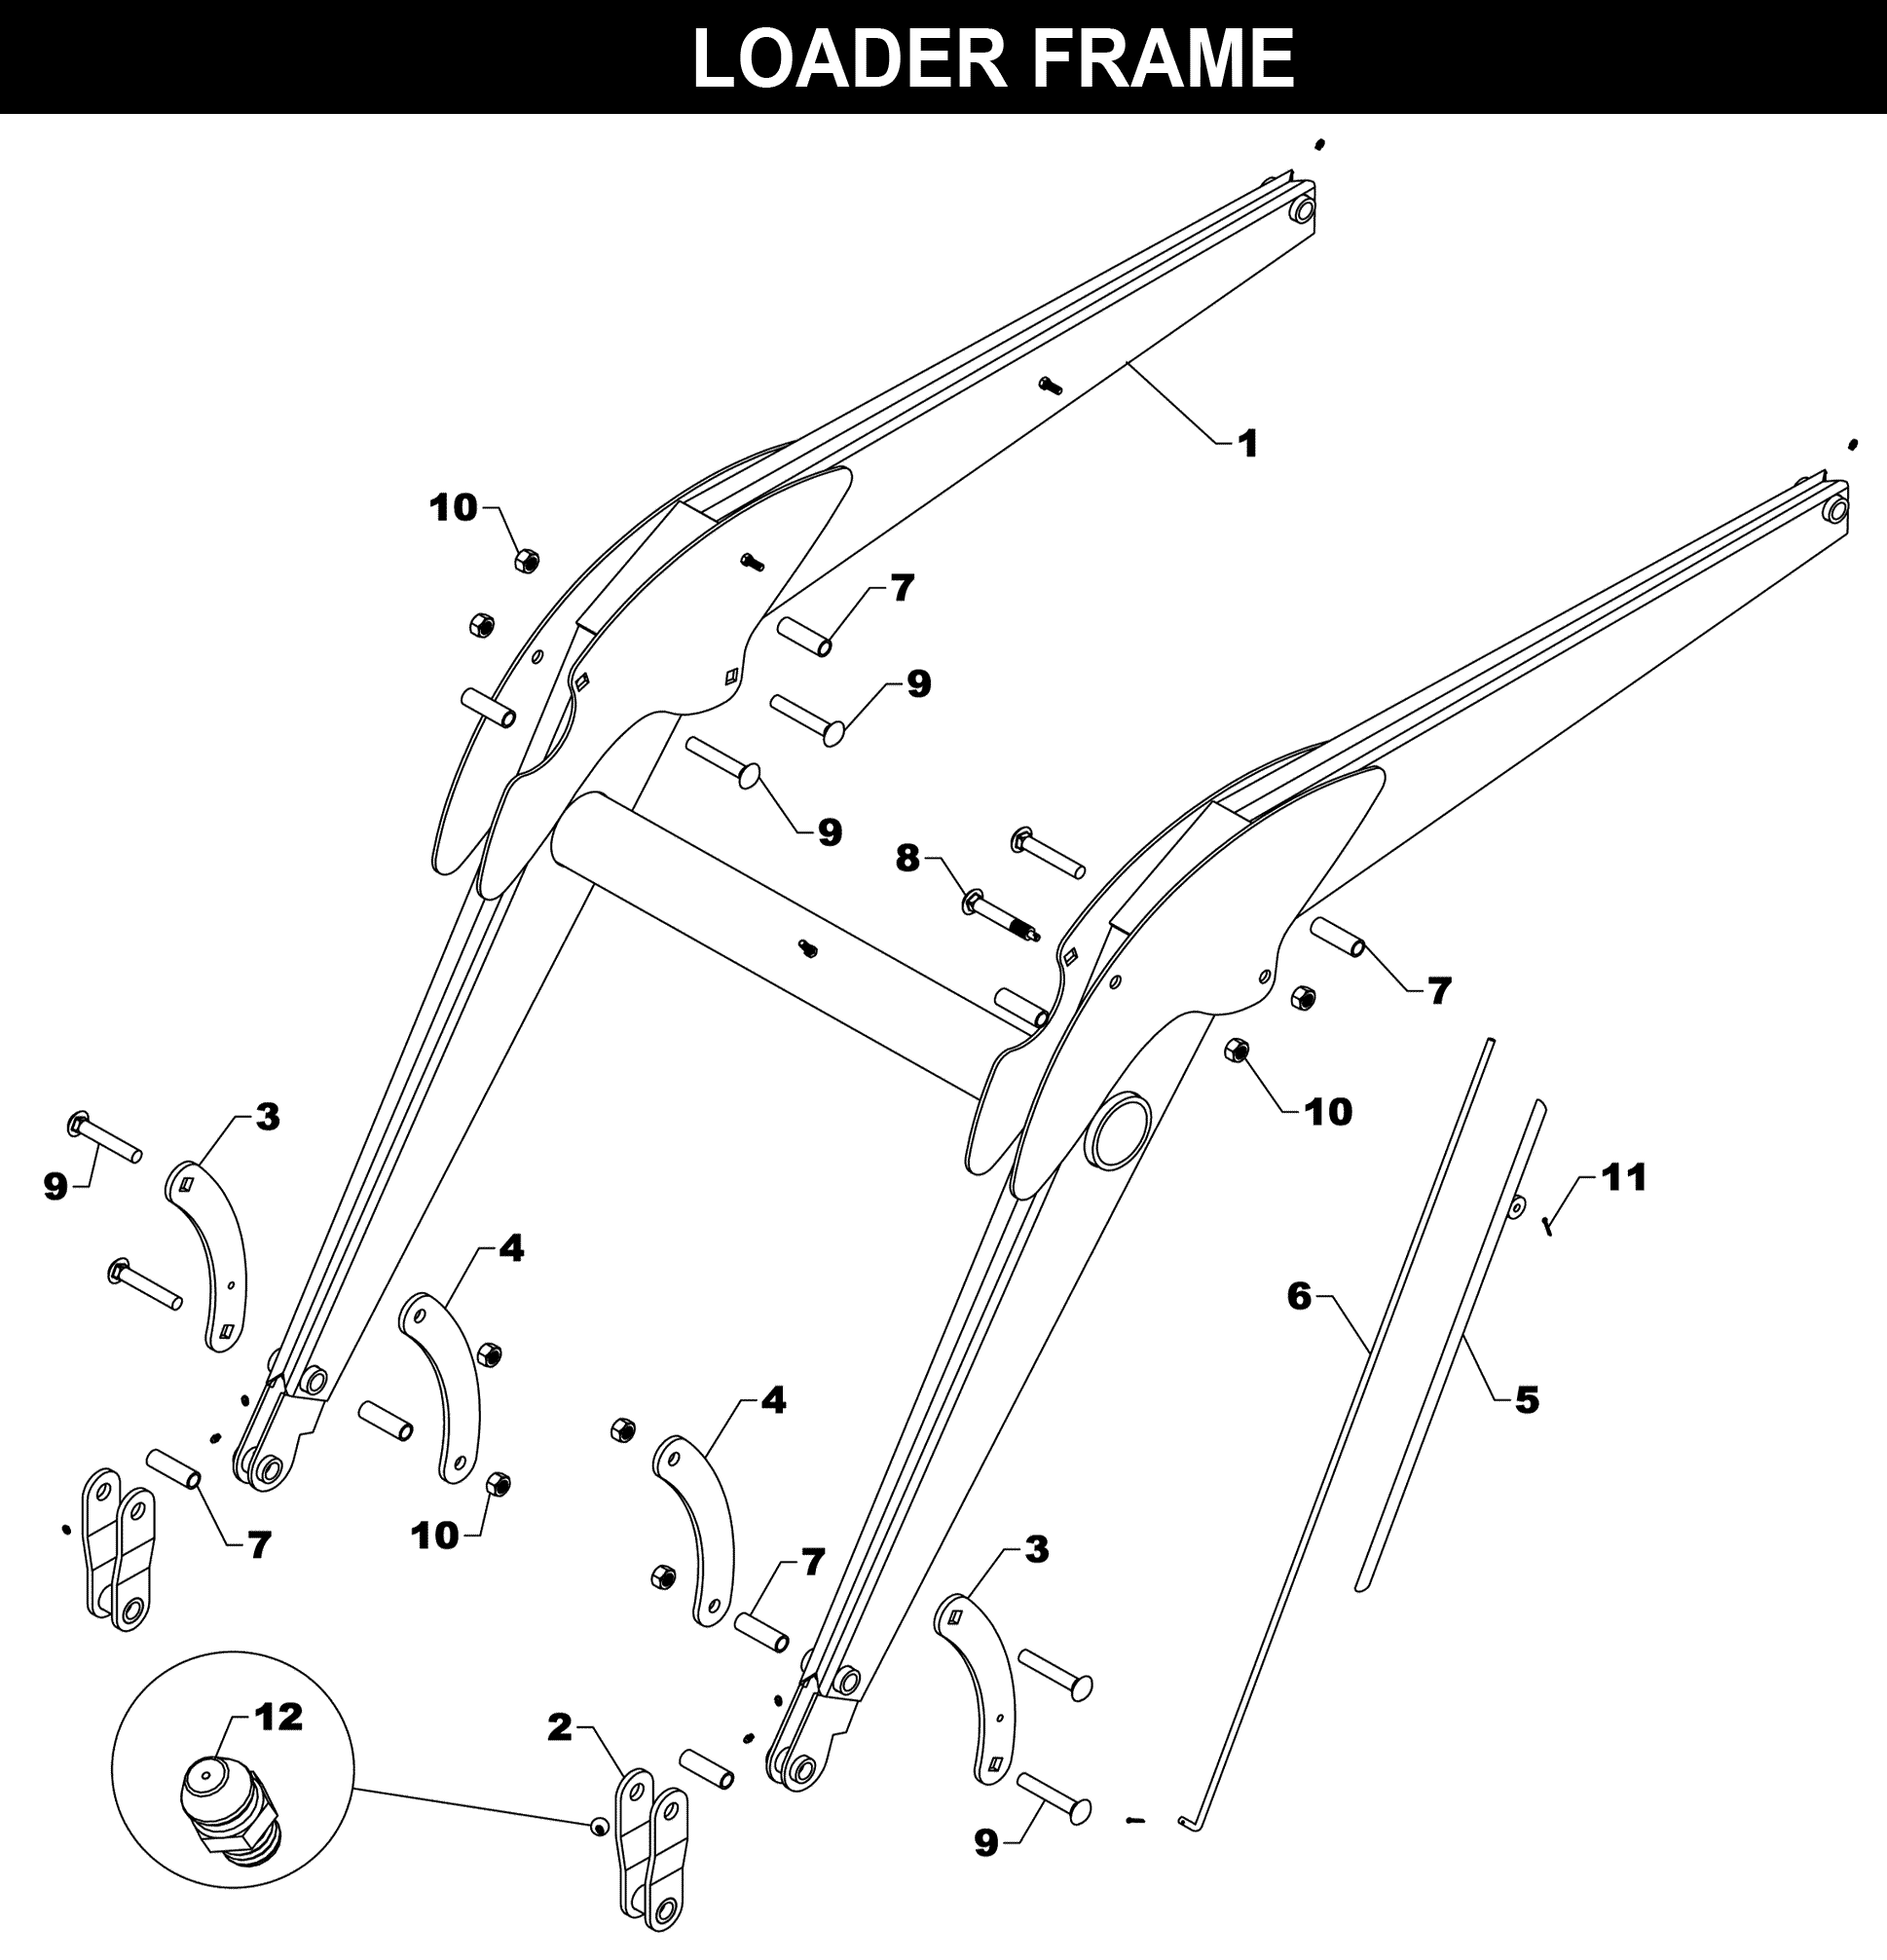 TA-185 Loader Frame